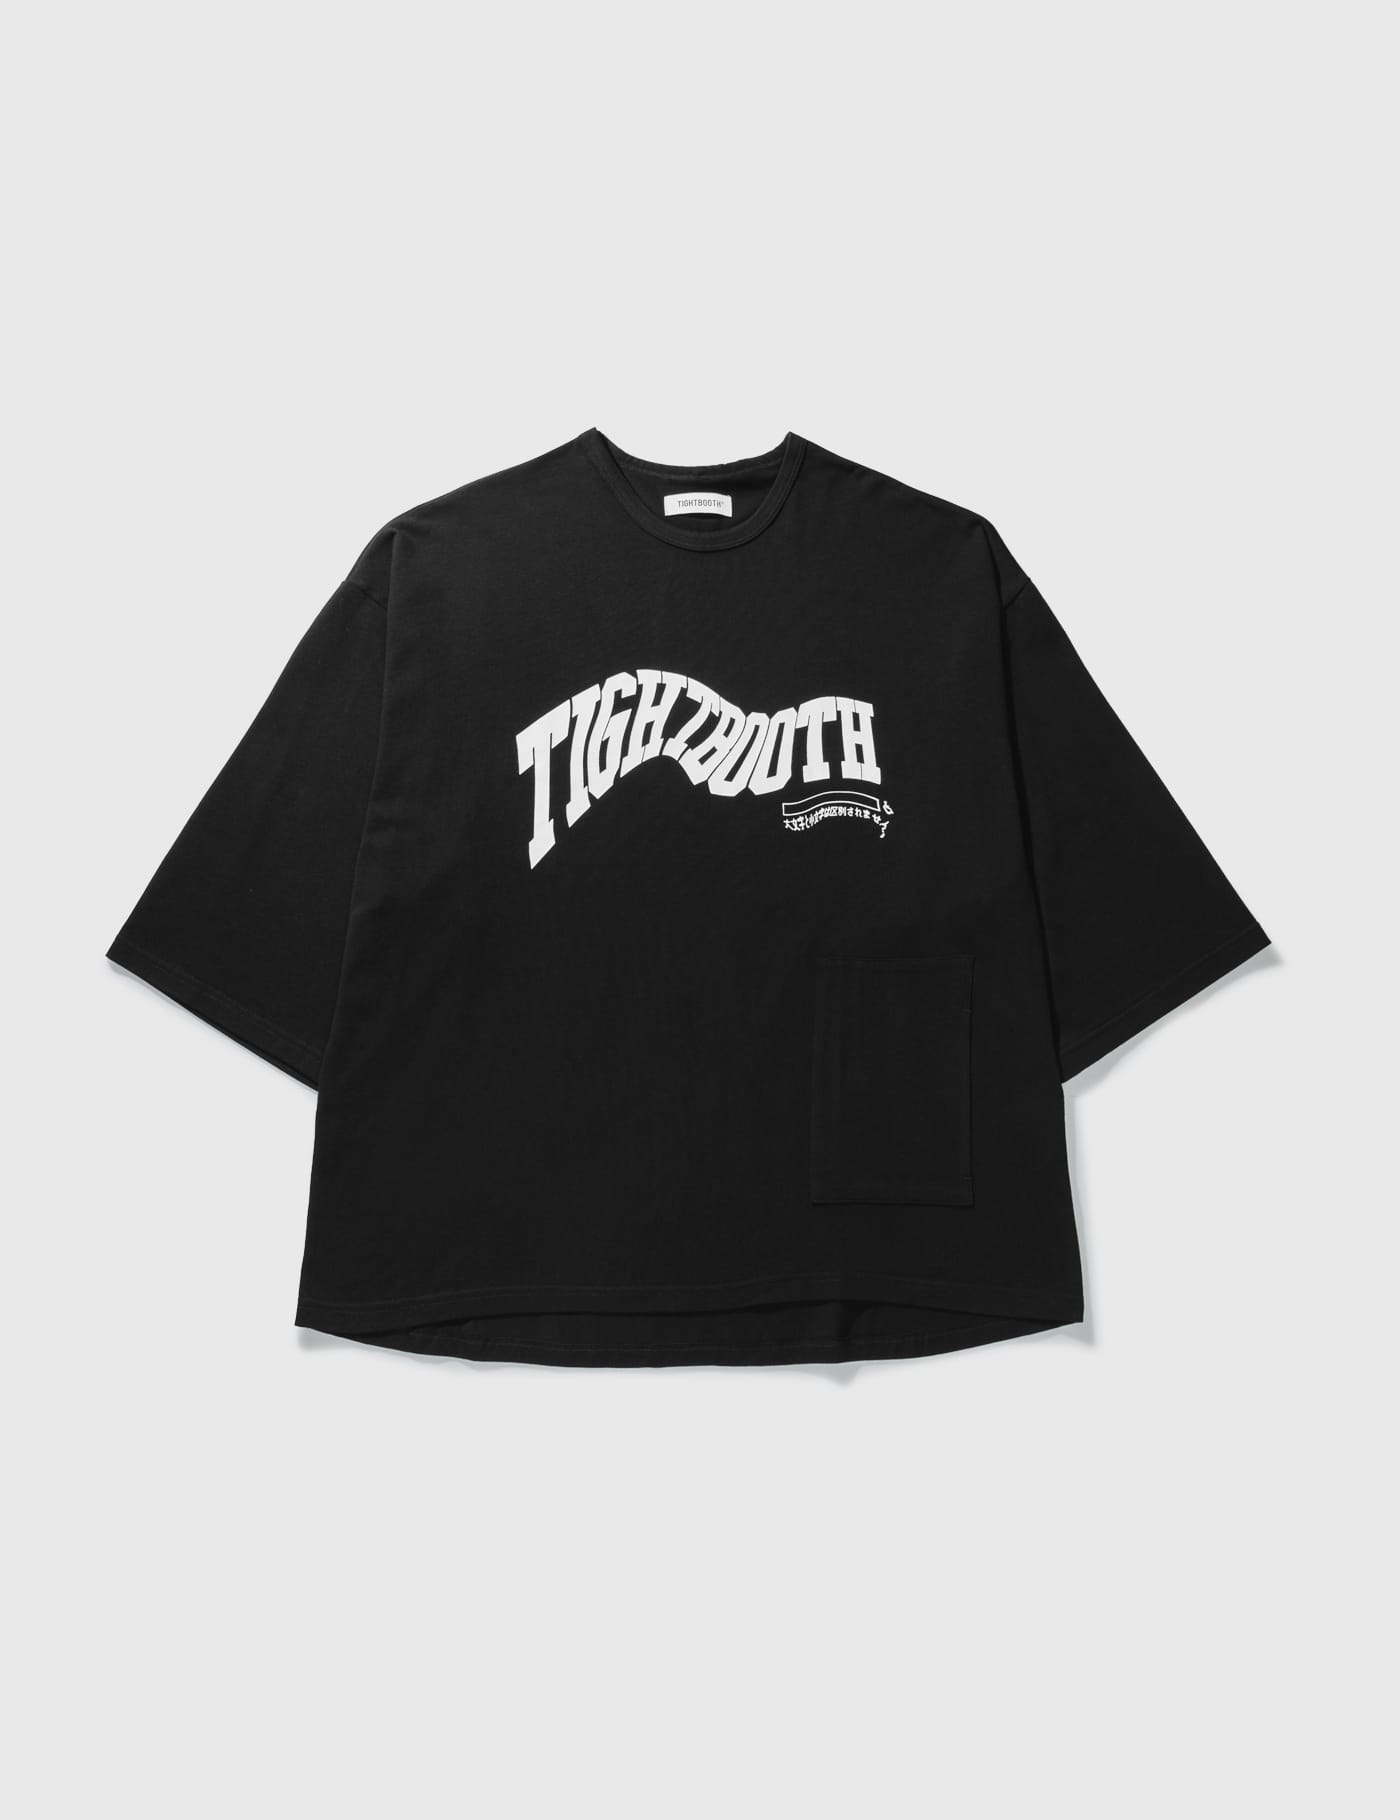 TIGHTBOOTH - Acid Logo 7 T-shirt | HBX - Globally Curated Fashion